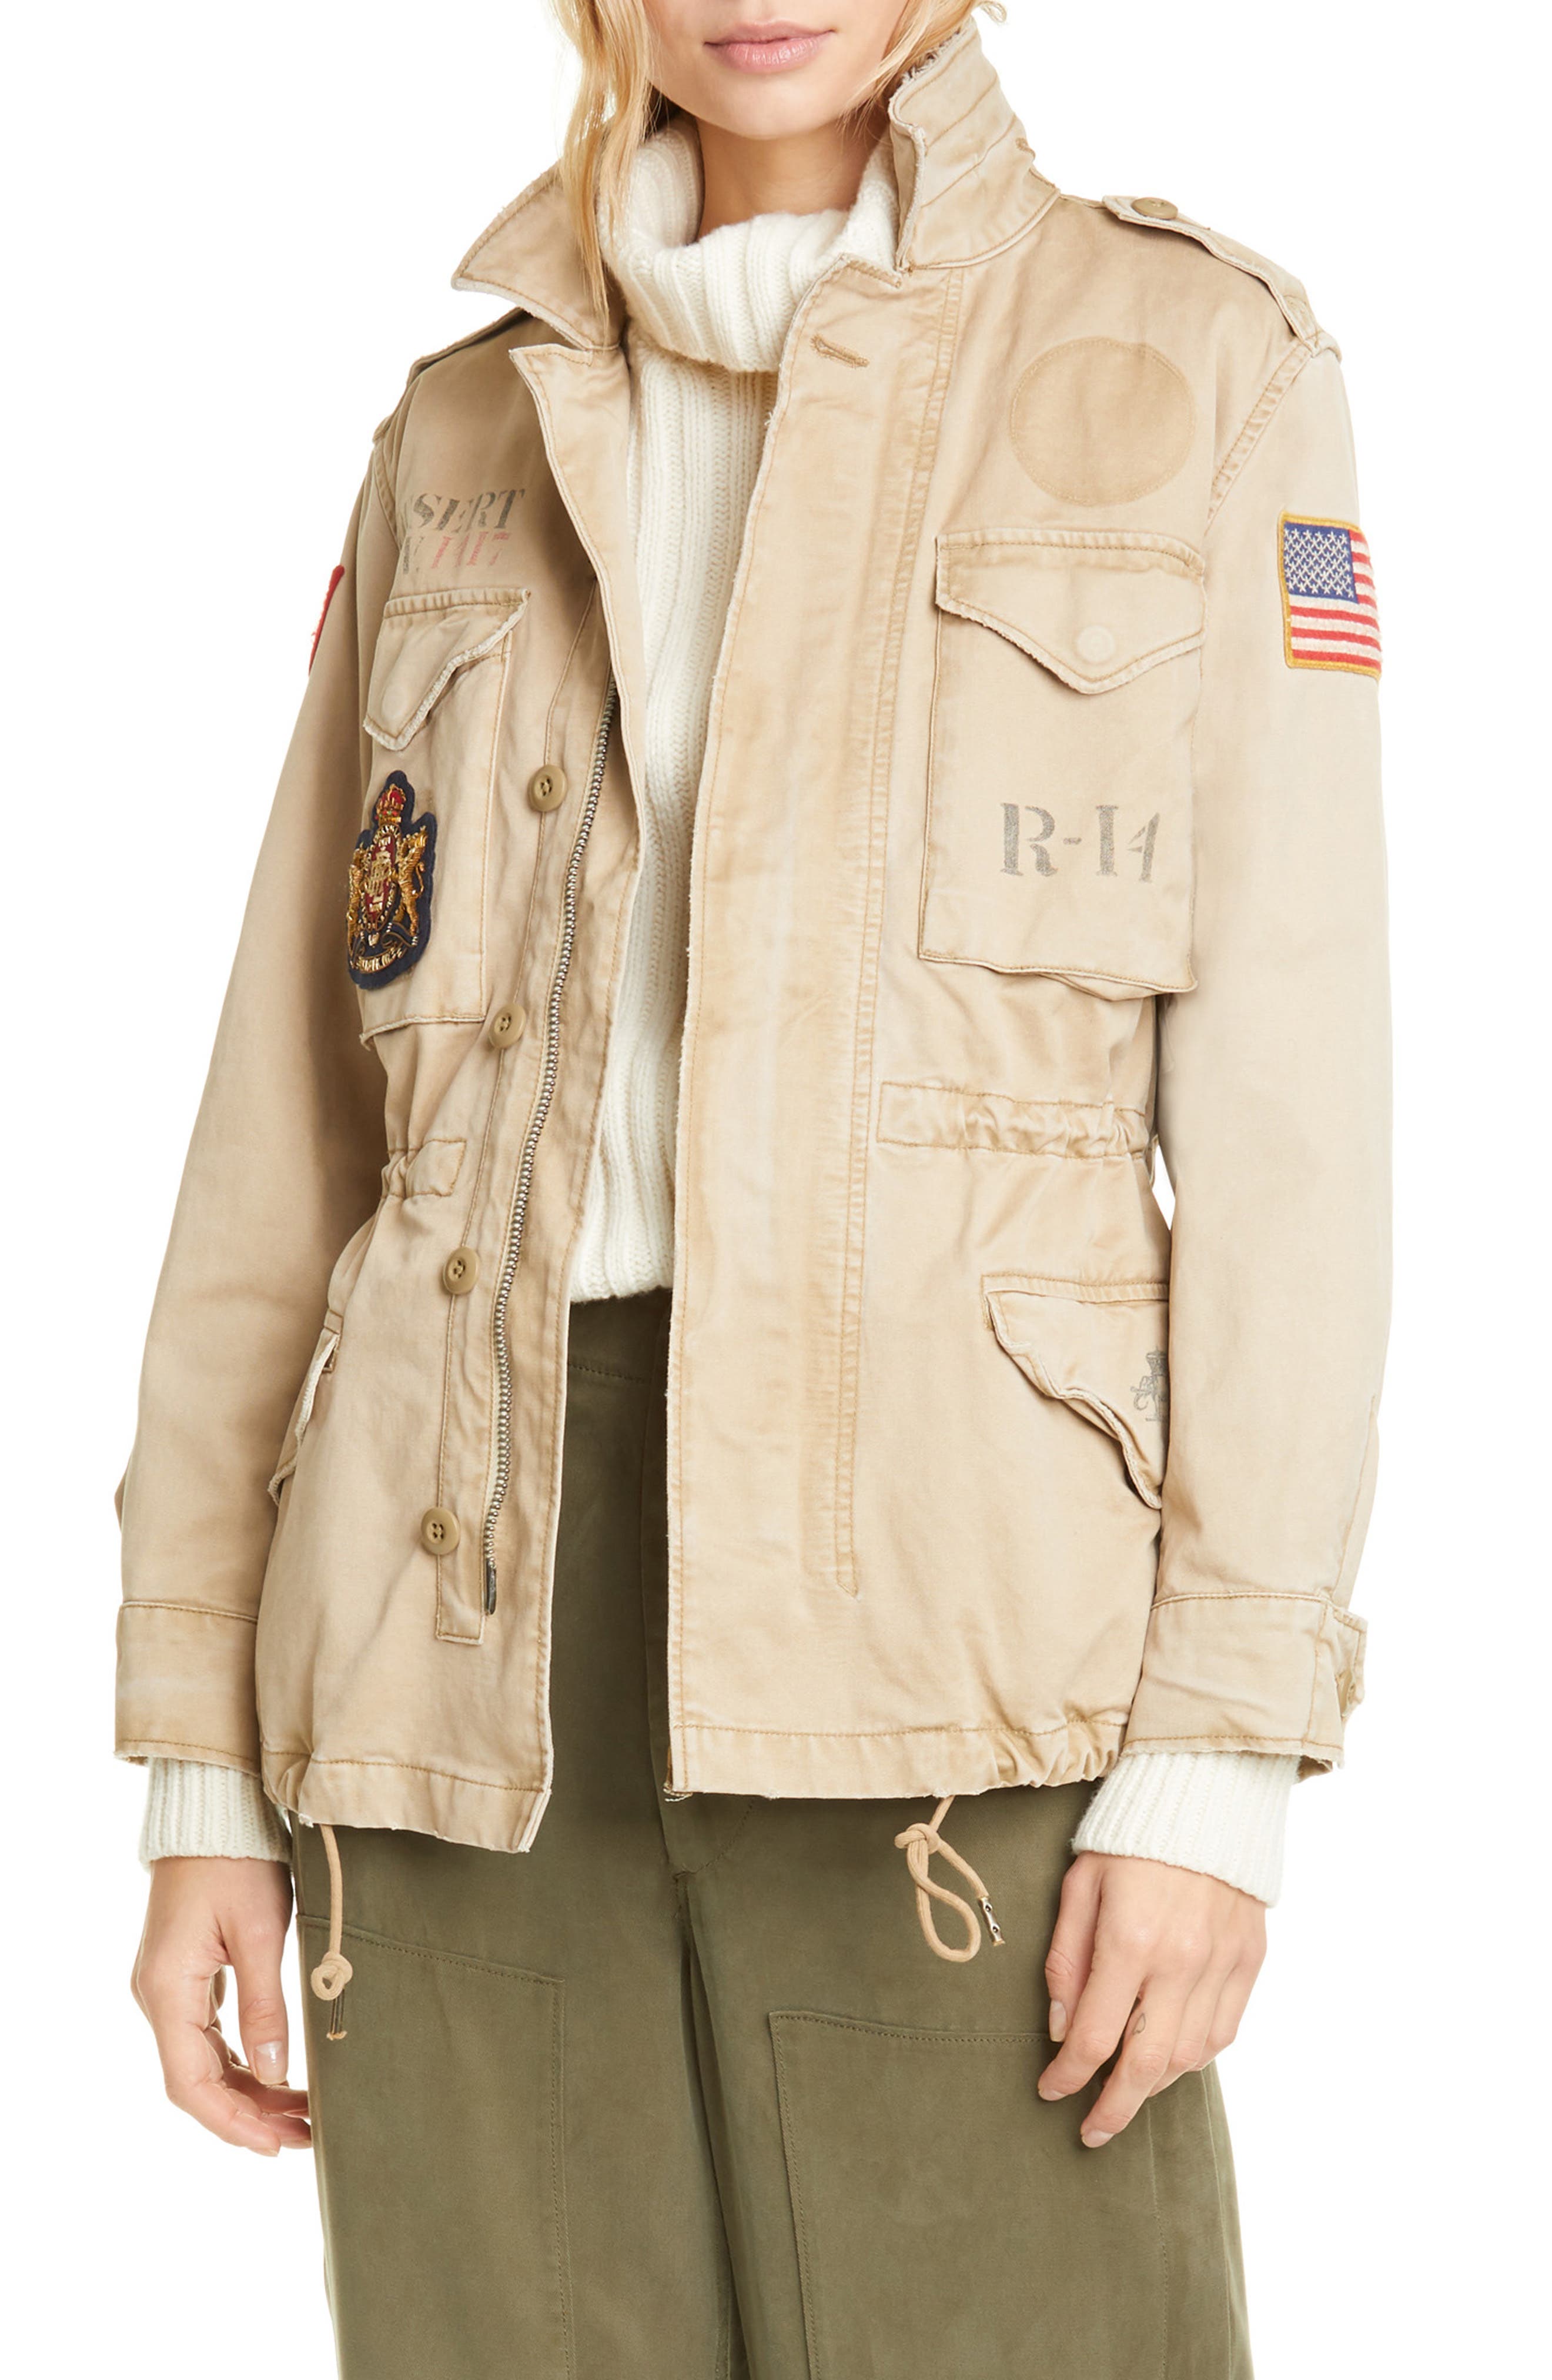 ralph lauren military style jacket